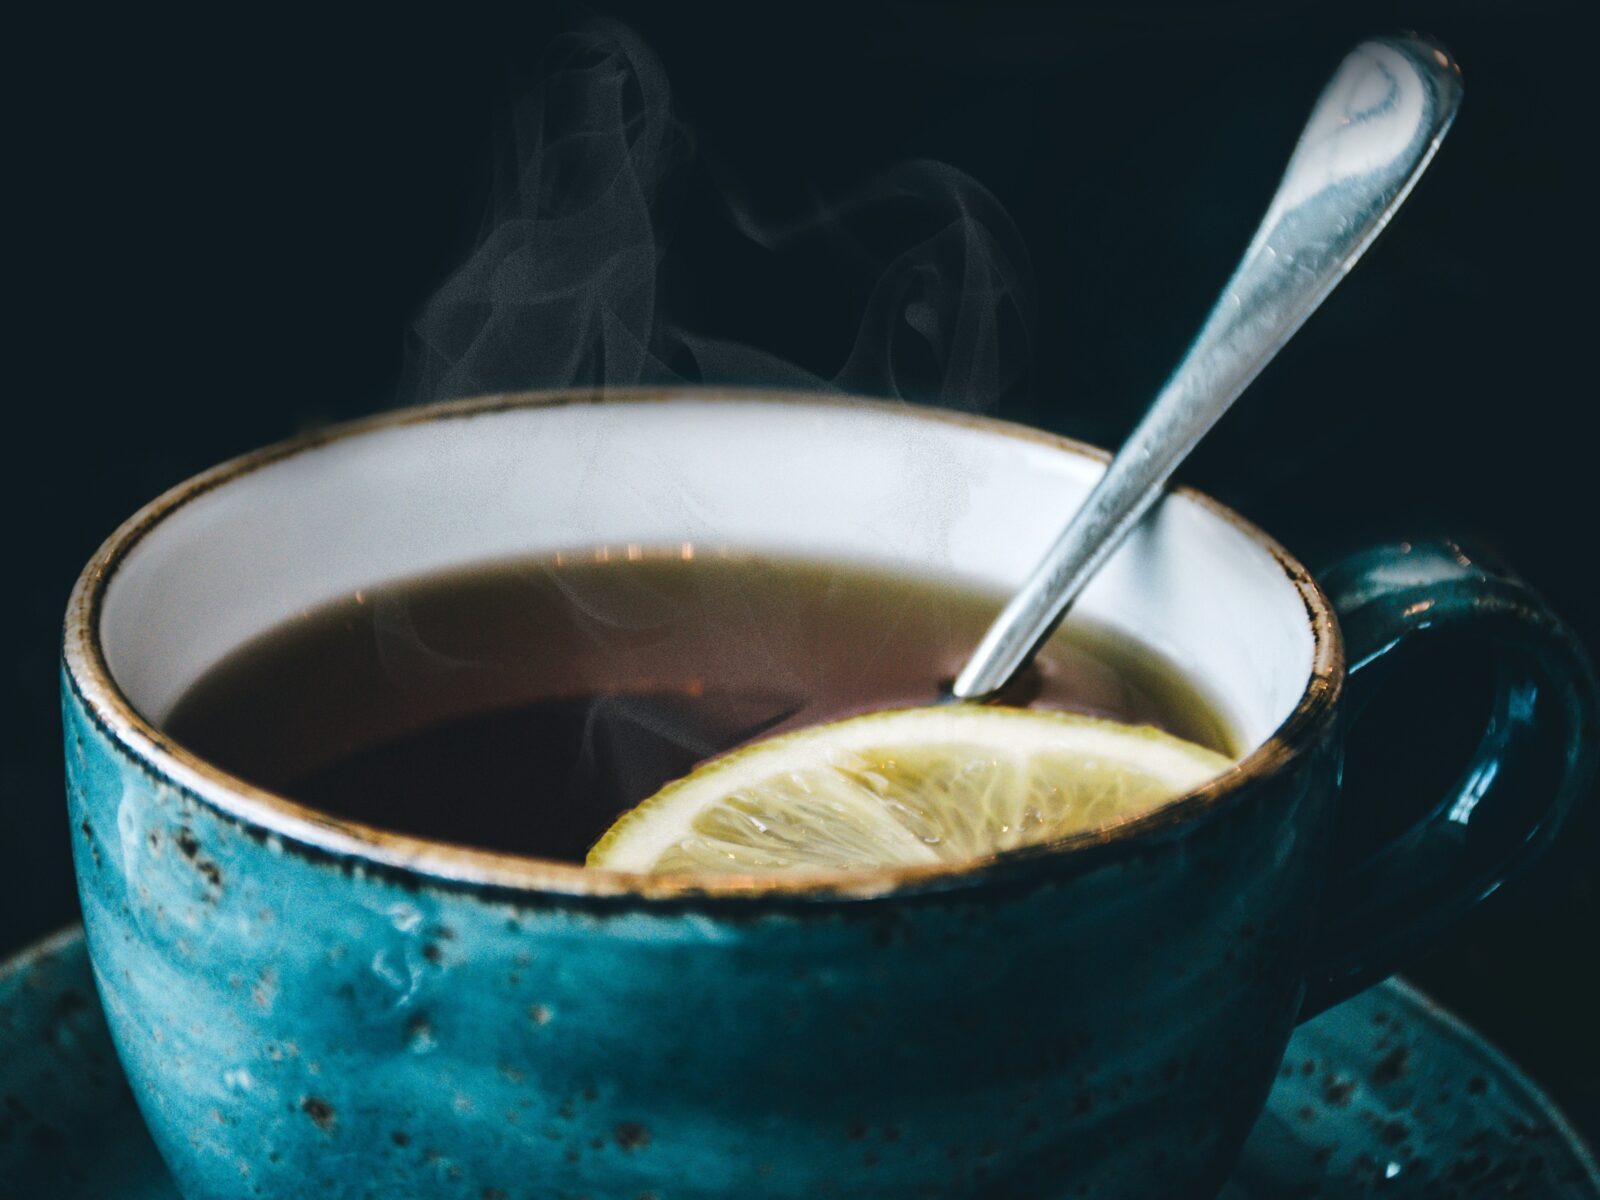 blue ceramic cup of tea with teaspoon and slice of lemon